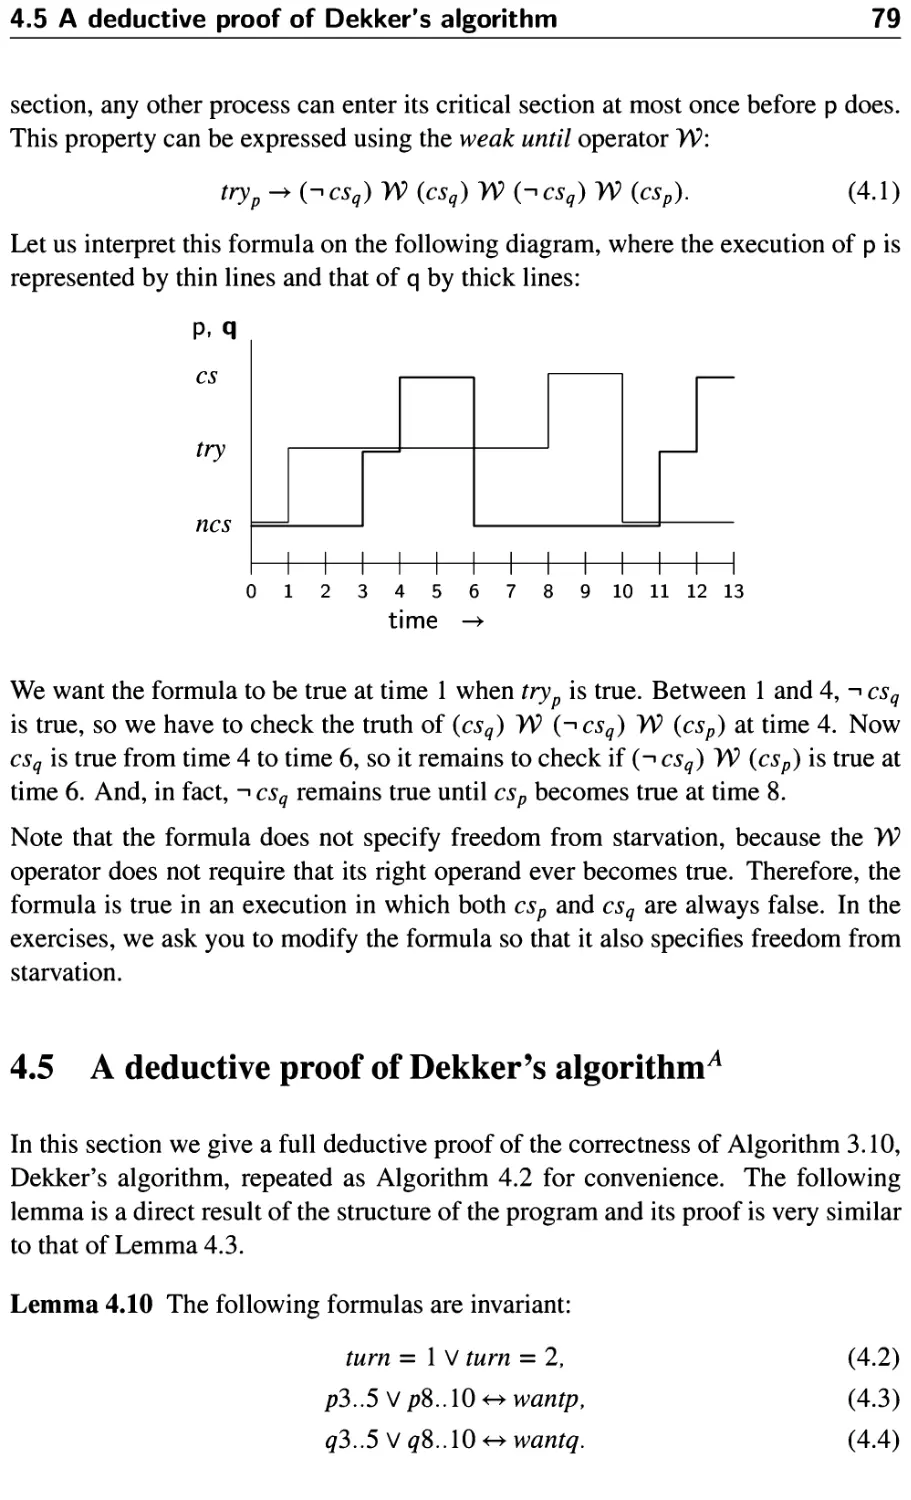 4.5 A deductive proof of Dekker’s algorithm